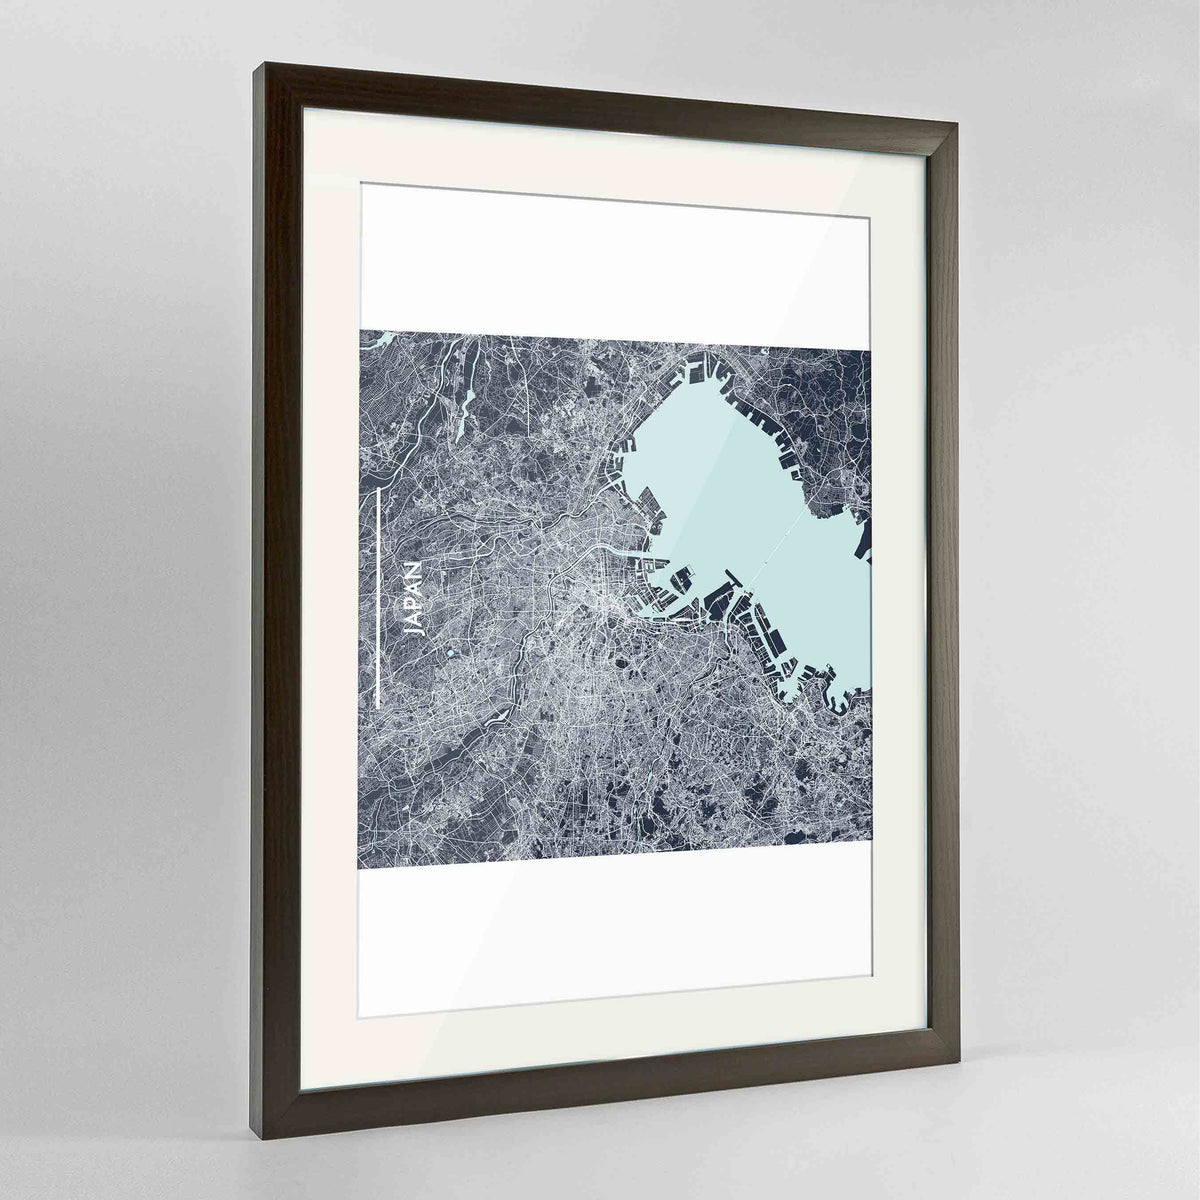 Tokyo Map Art Print - Framed